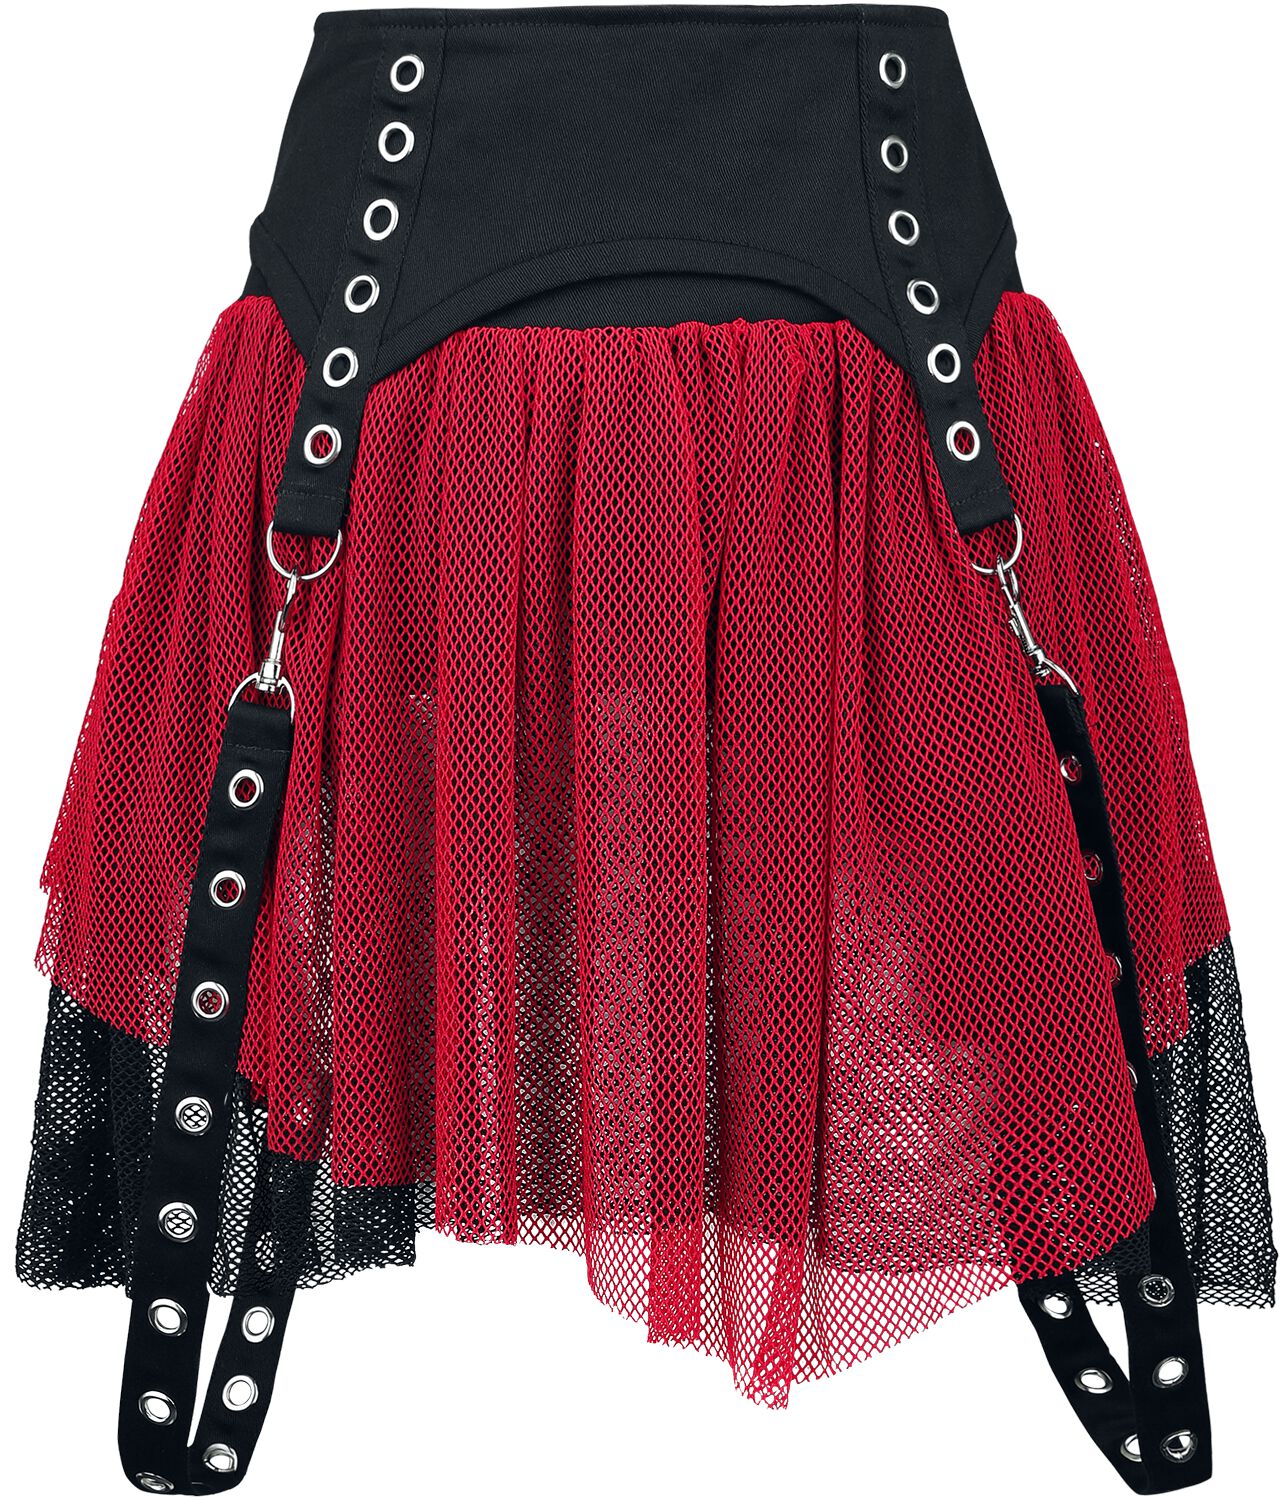 Image of Minigonna Gothic di Poizen Industries - Cybele skirt - XS a L - Donna - nero/rosso